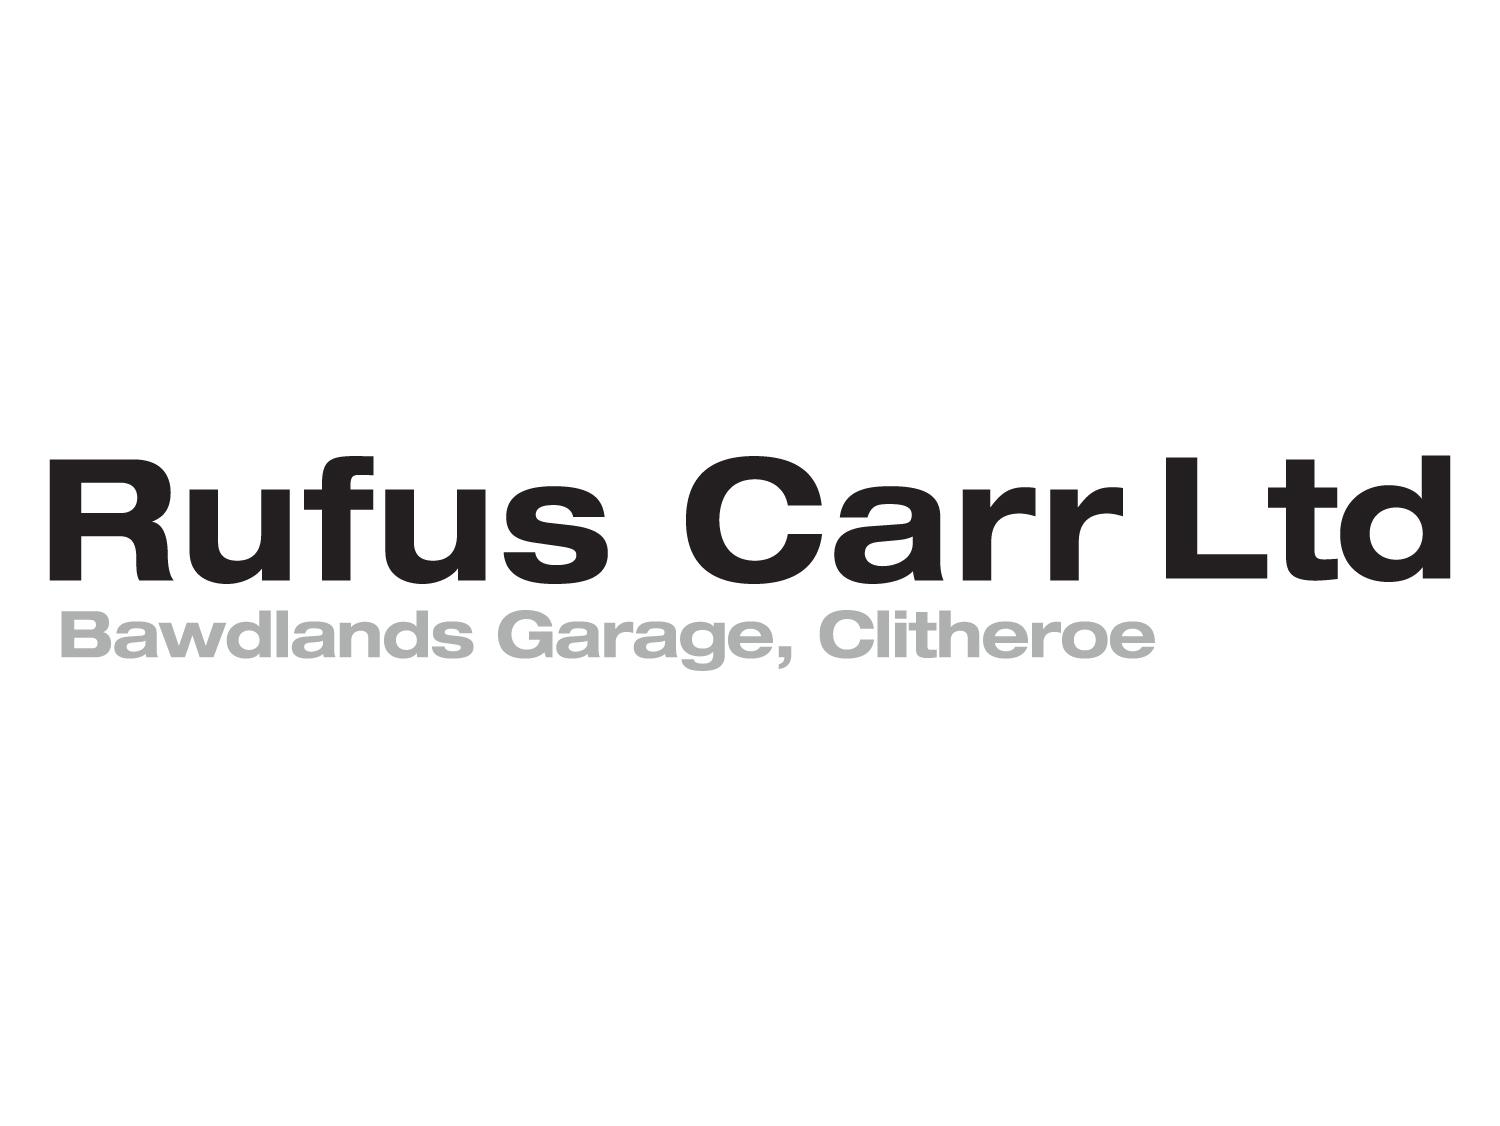 Rufus Carr Ltd